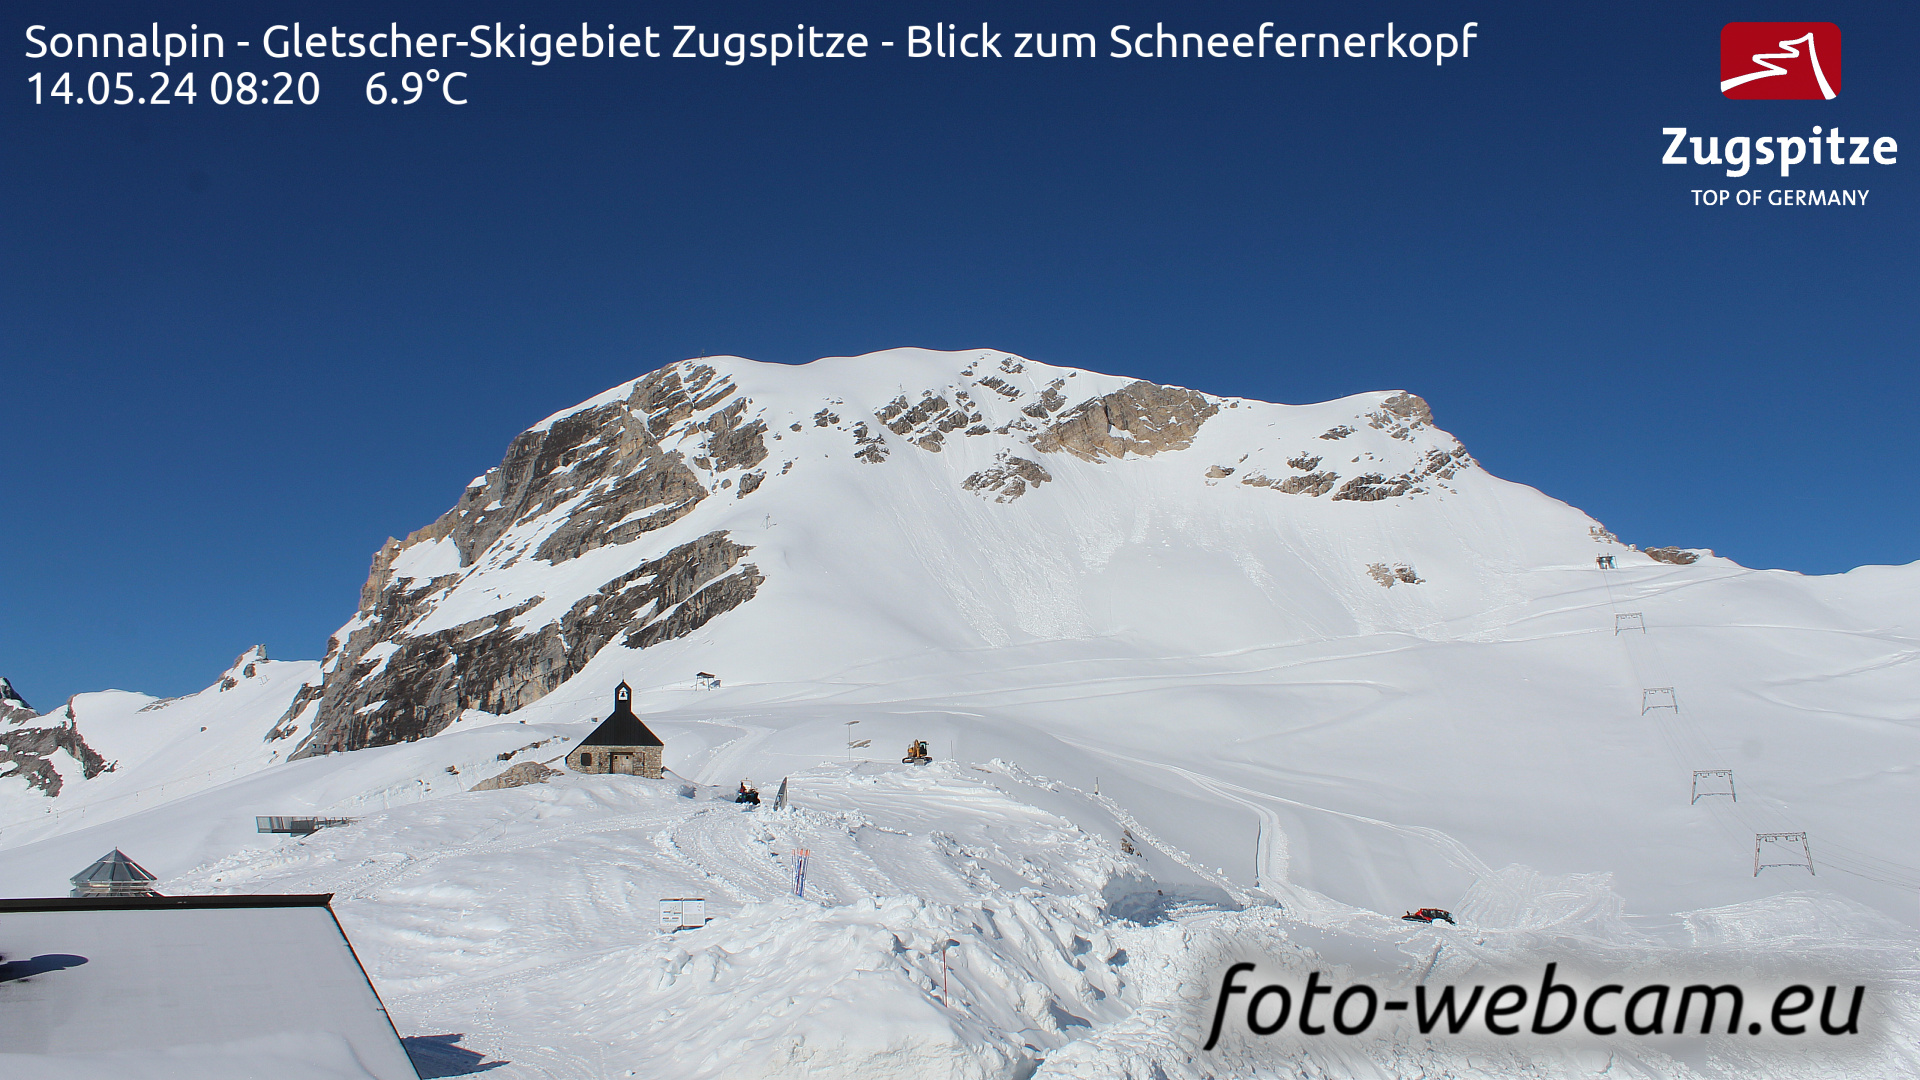 Zugspitze Gio. 08:24